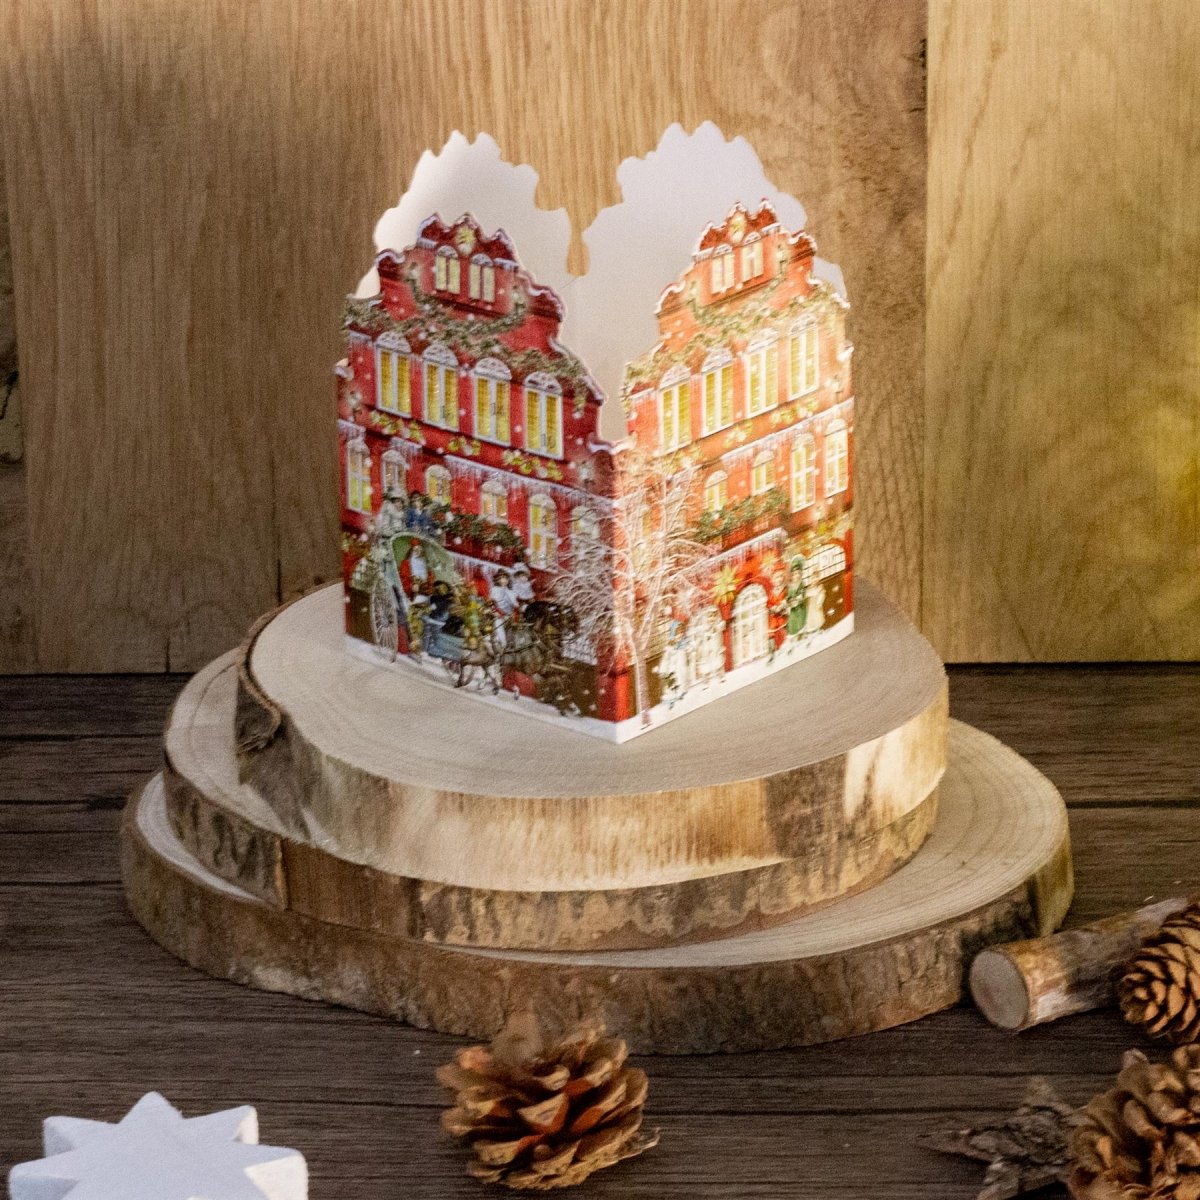 Deluxe Mini Advent Calendar Christmas Card - Nostalgic House Tealight Lantern - Red House